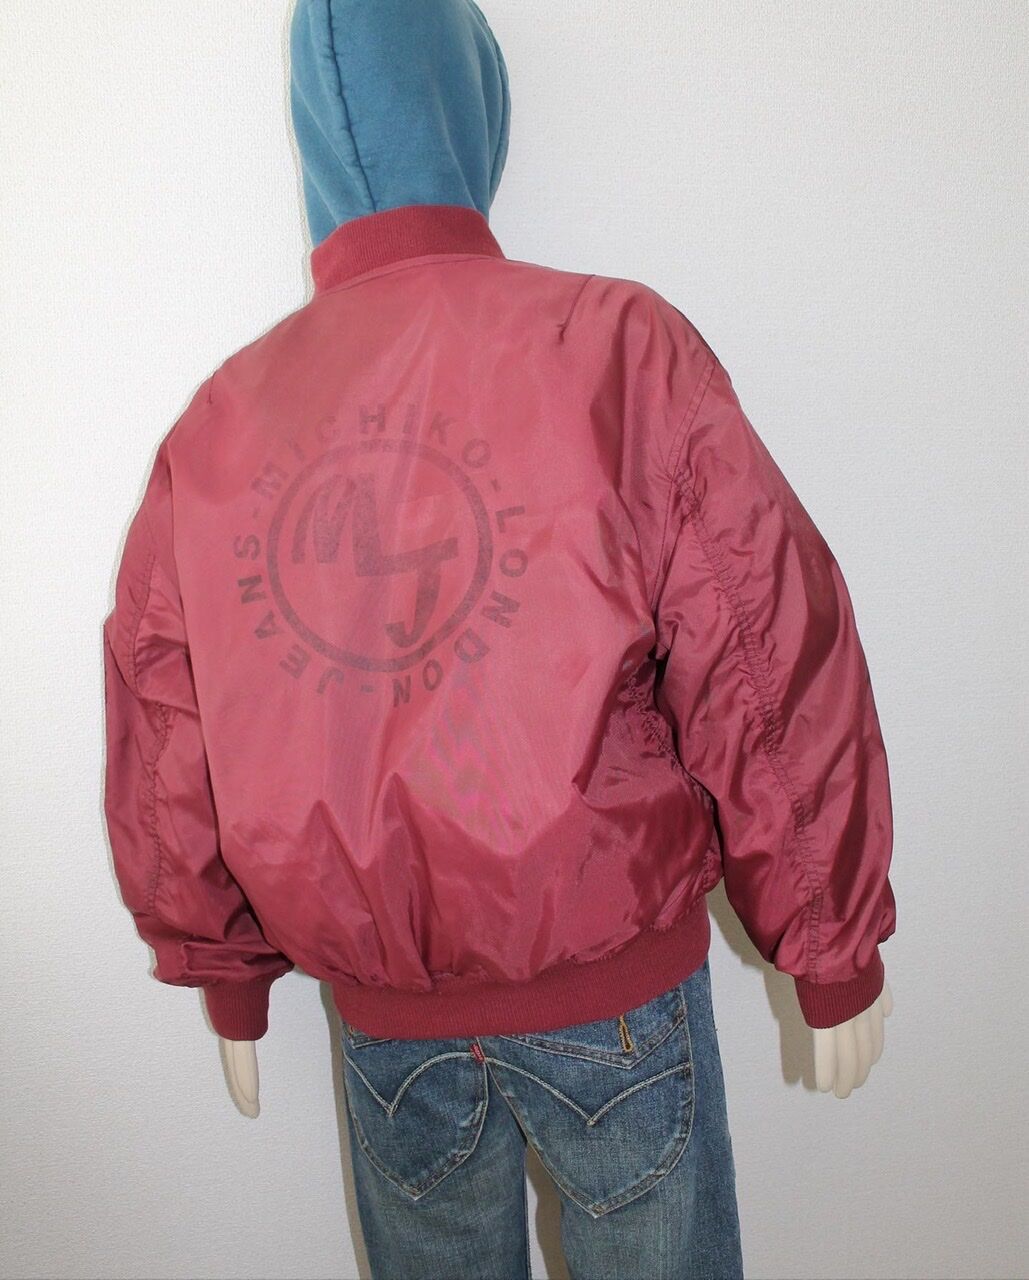 90s MICHIKO LONDON JEANS 🇬🇧 faded bomber jacket...